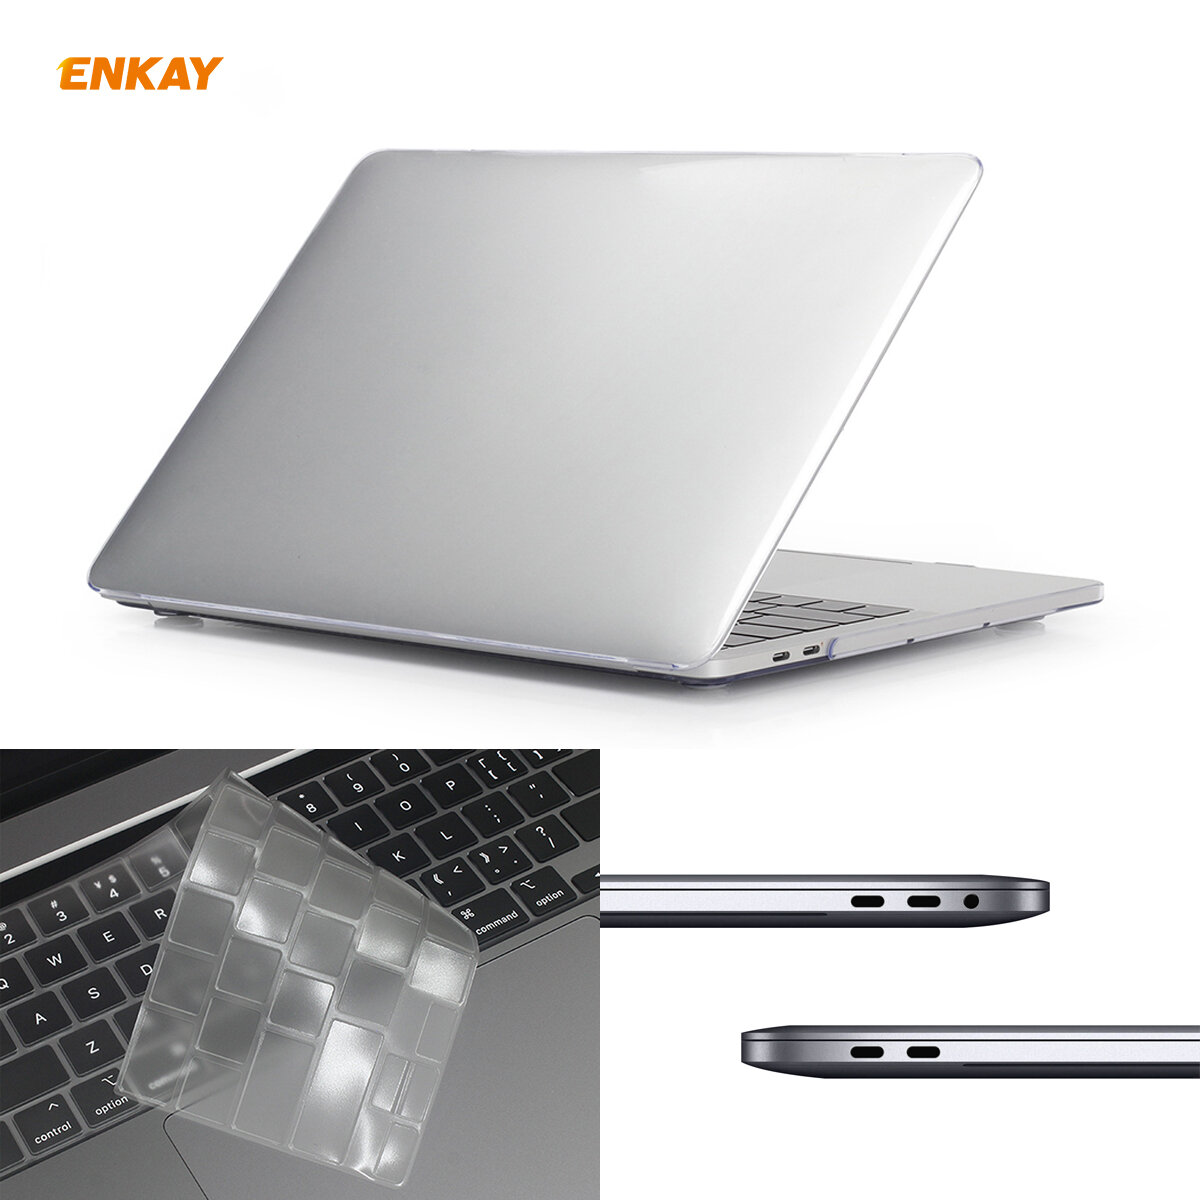 

Enkay 3-In-1 Ultra-Thin TPU Keyboard Protective Film + Full Body Matte Case Cover + Dustproof Plug for MacBook Pro 13 in